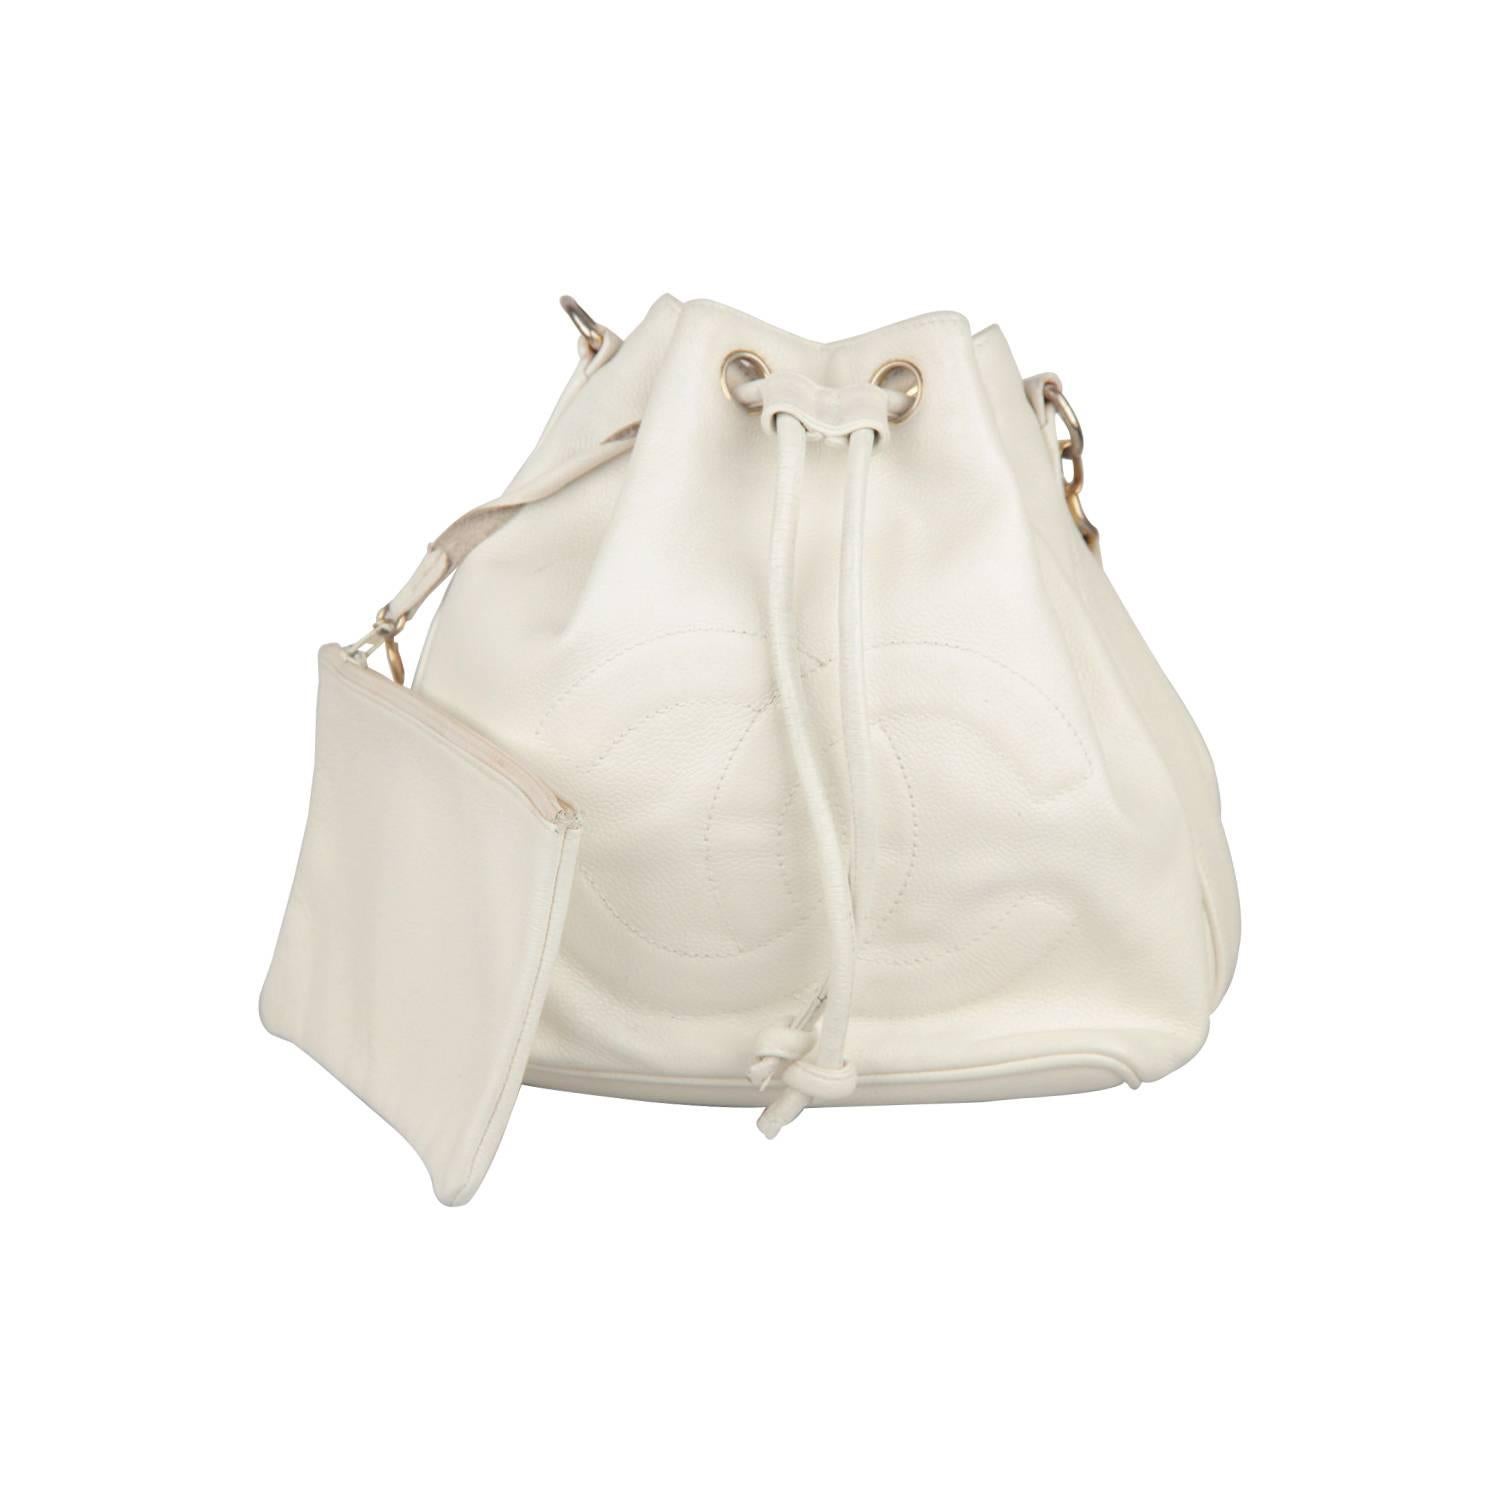 CHANEL Vintage White Leather DRAWSTRING BAG with CC LOGO